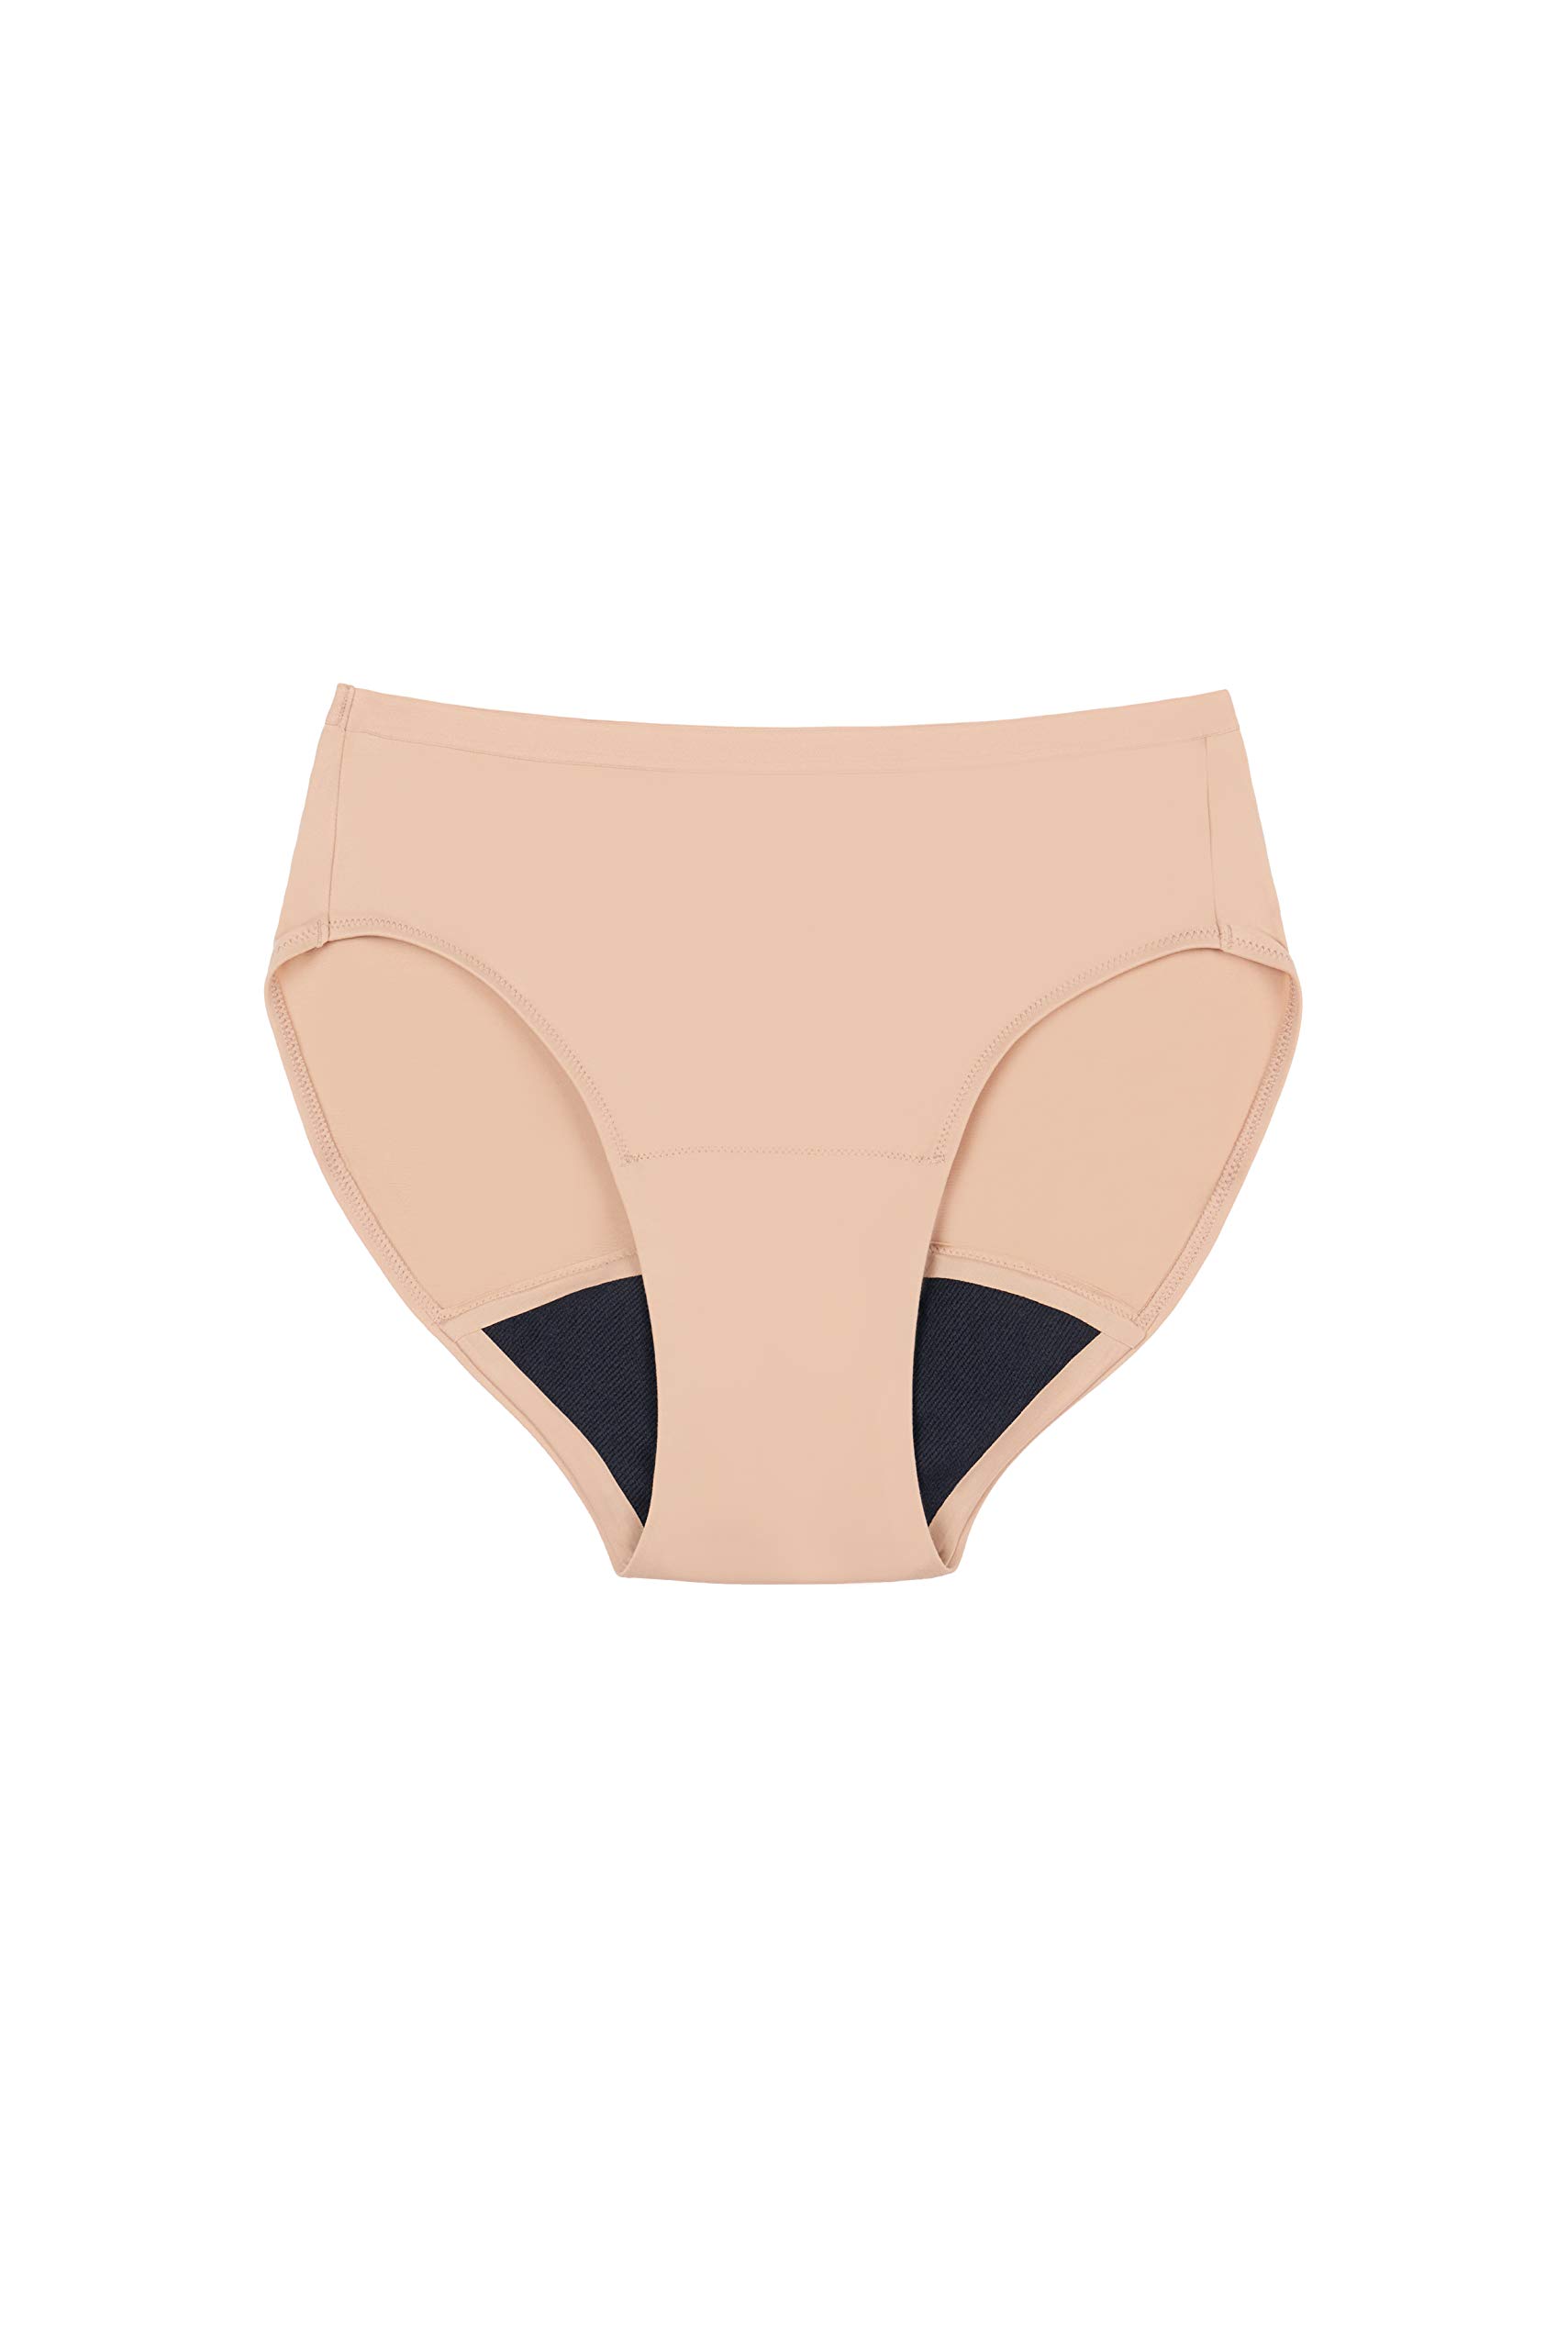 Speax by Thinx French Cut Women's Underwear for Bladder Leak Protection, Incontinence Underwear for Women